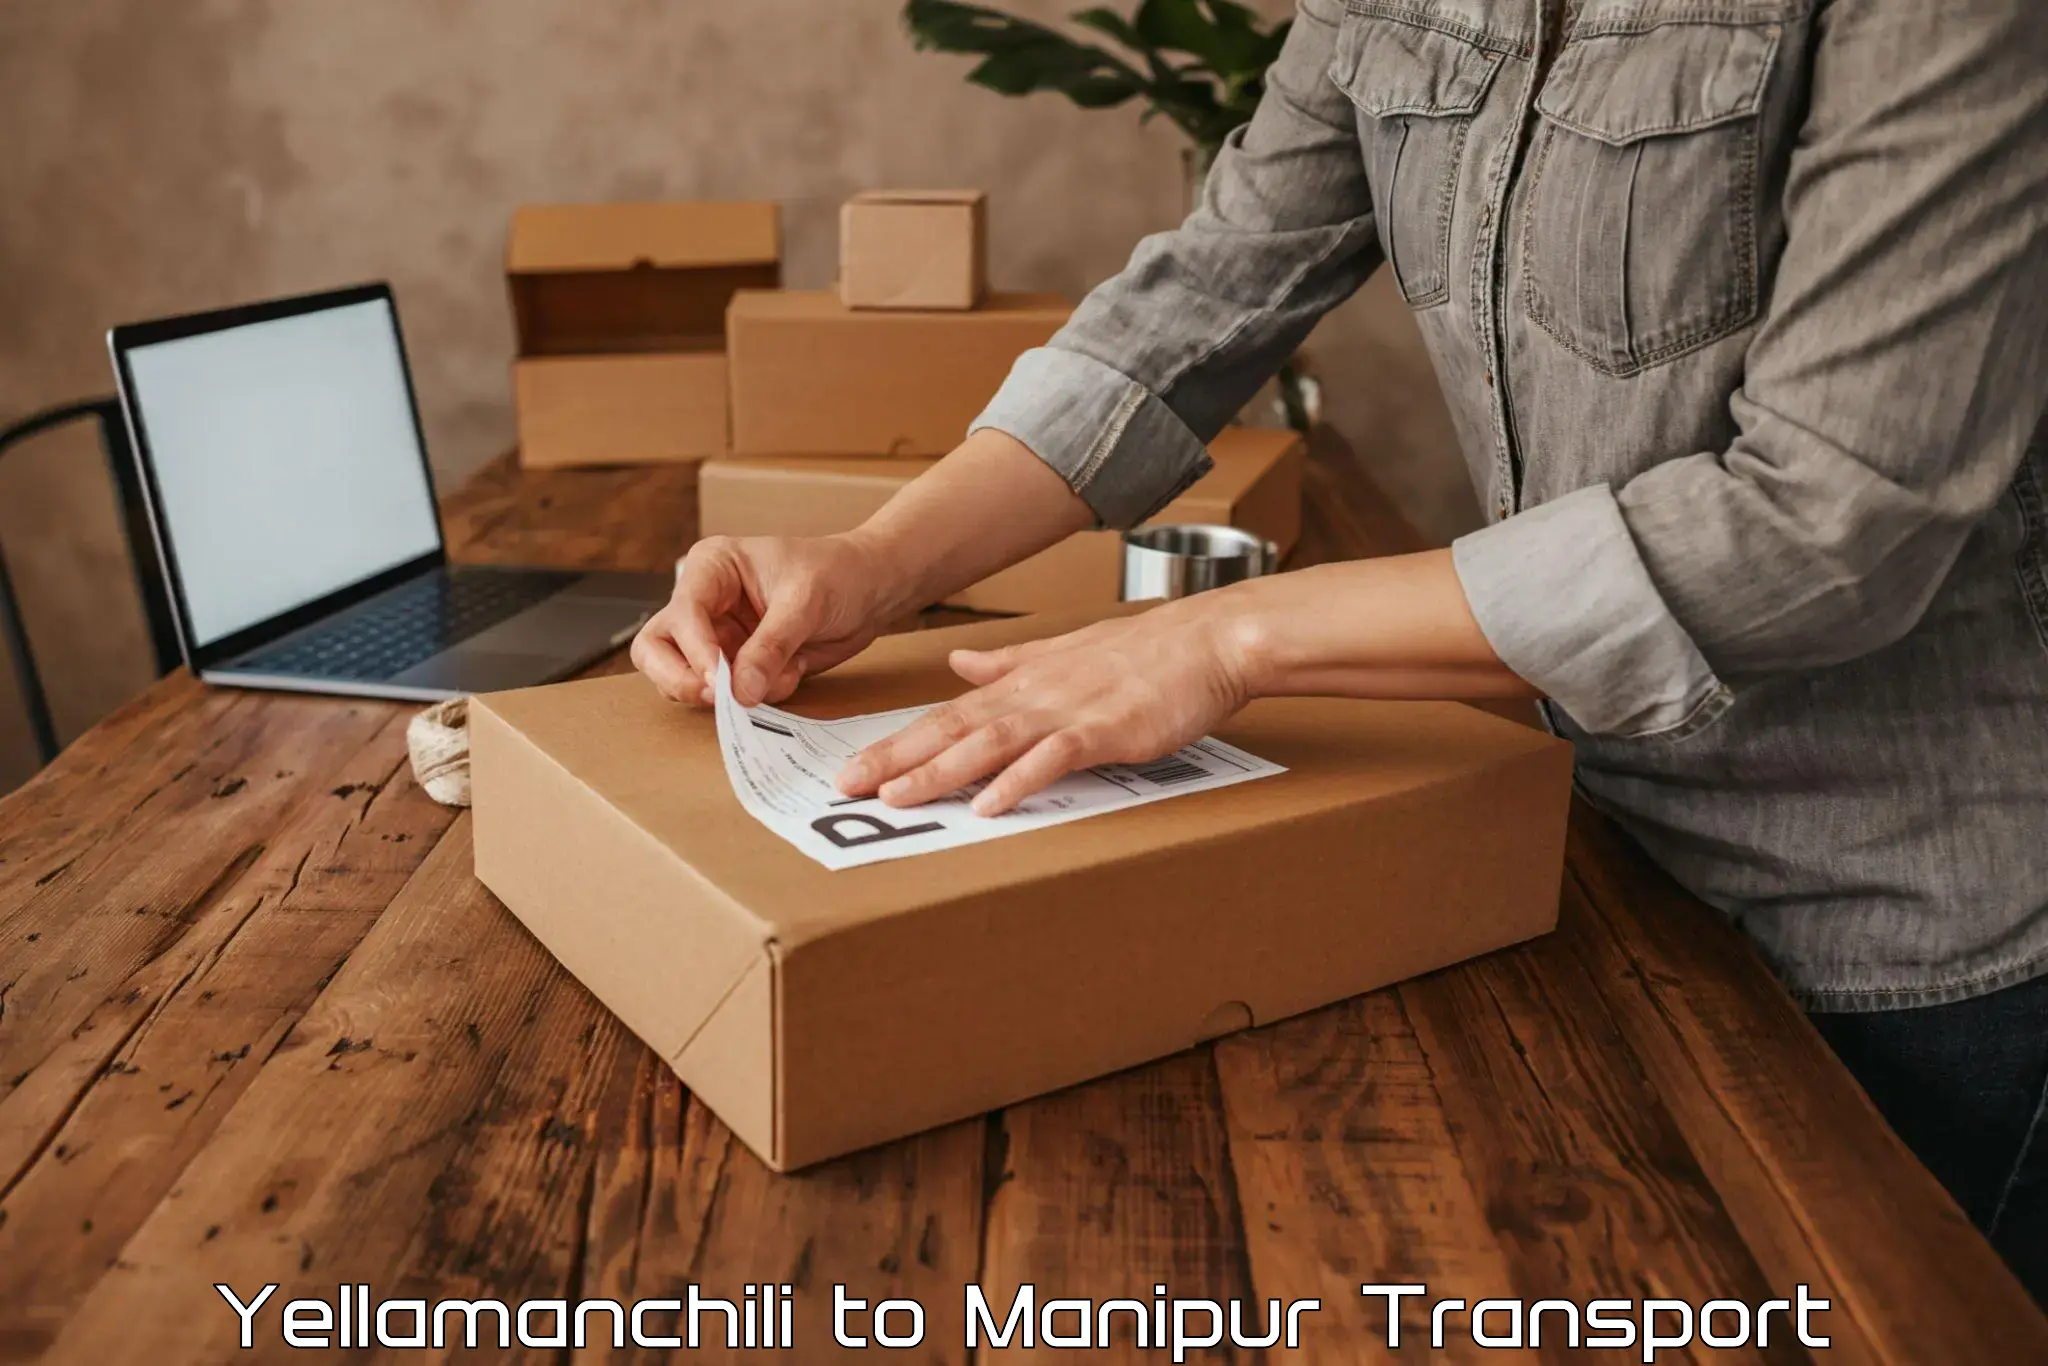 Two wheeler parcel service Yellamanchili to Manipur